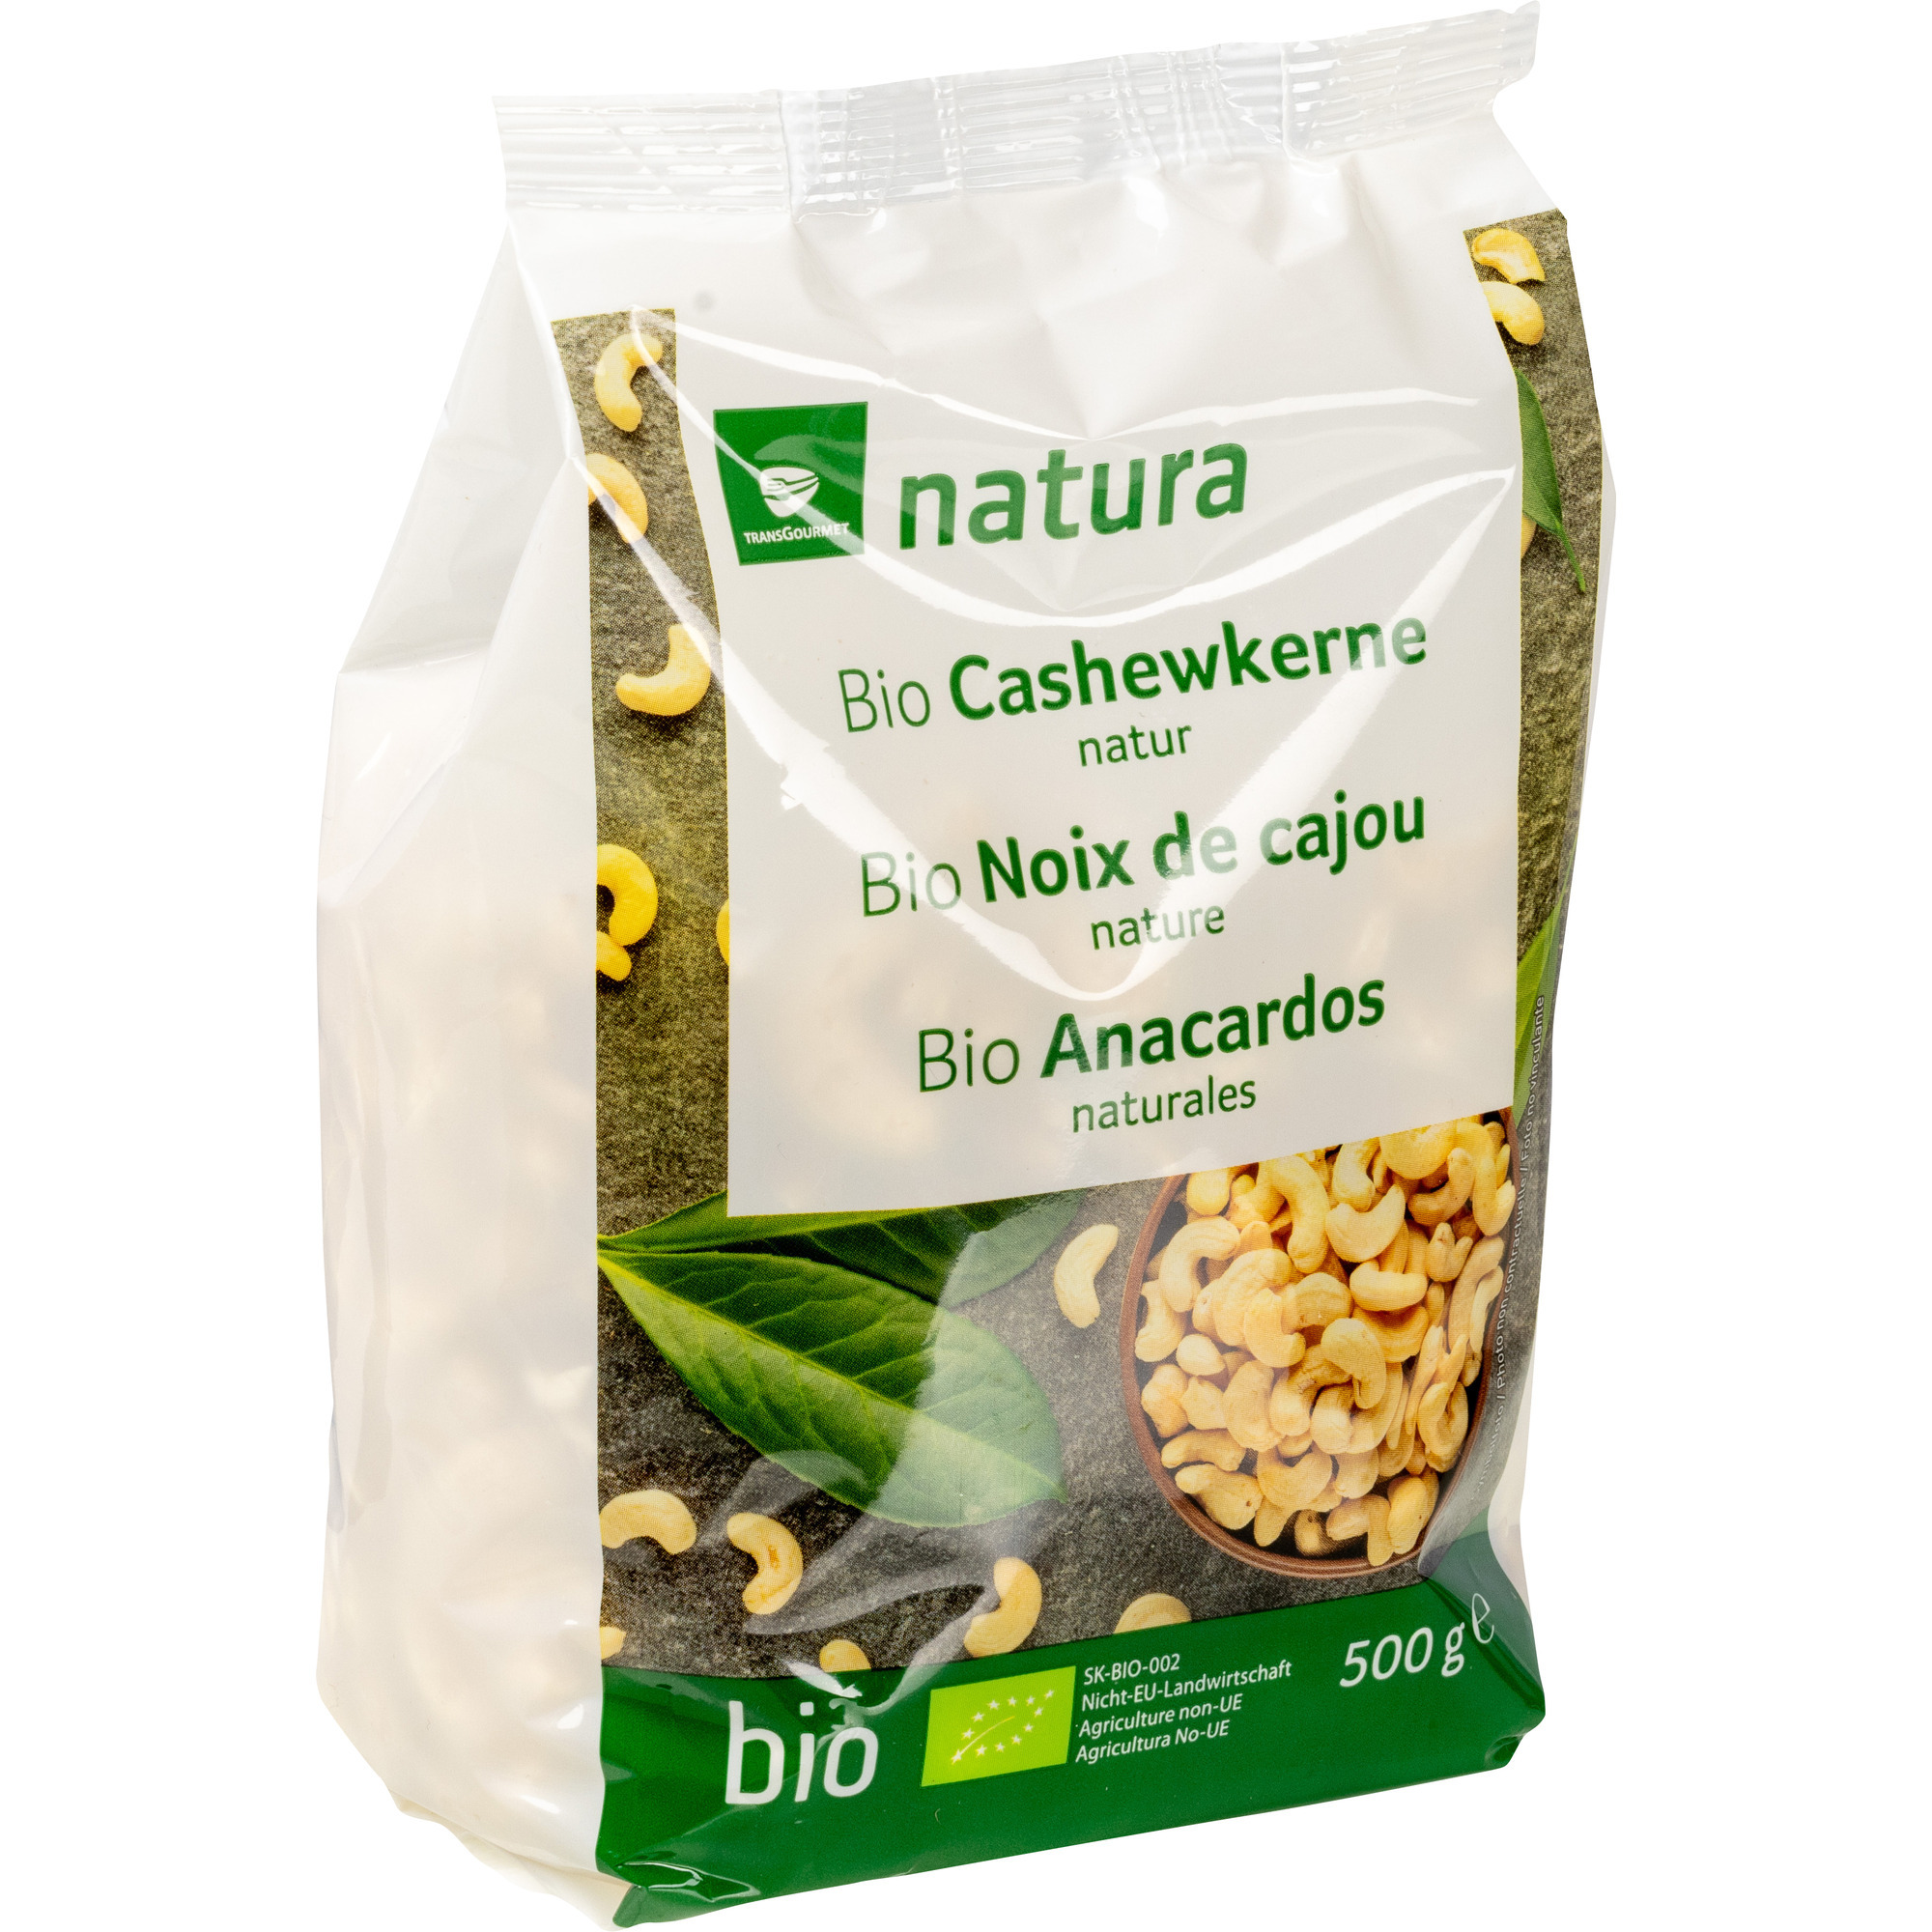 Natura Bio Cashewkerne natur 500g